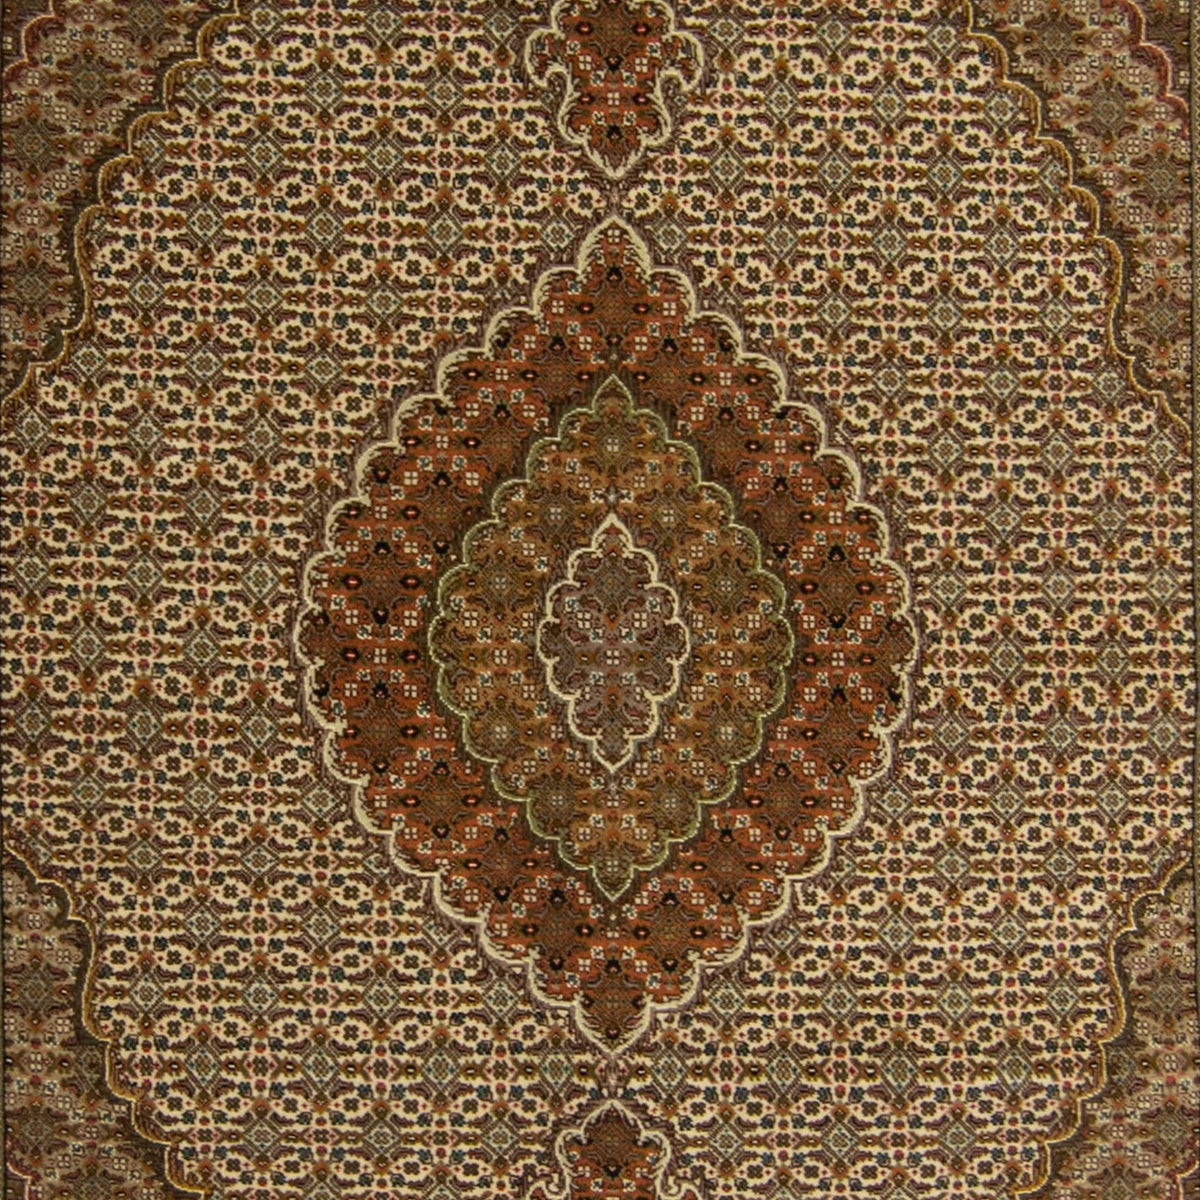 Fine Hand-knotted Persian Tabriz - Mahi Rug 154cm x 202cm